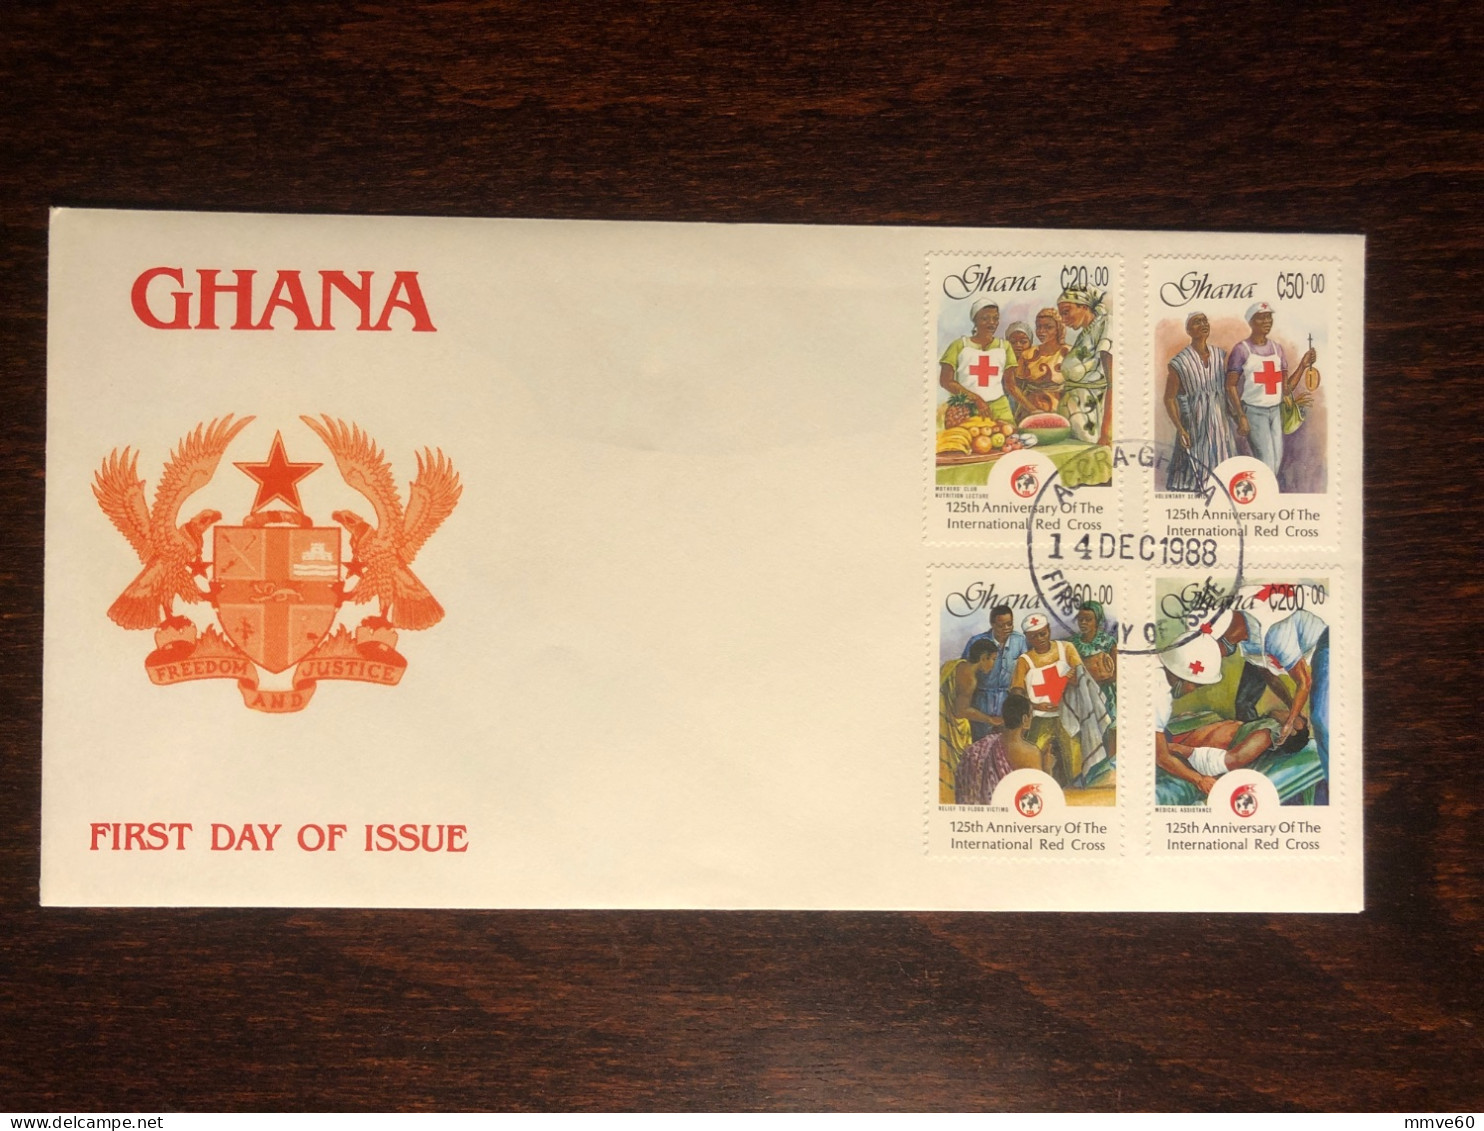 GHANA FDC COVER 1988 YEAR RED CROSS BLIND HELP HEALTH MEDICINE STAMPS - Ghana (1957-...)